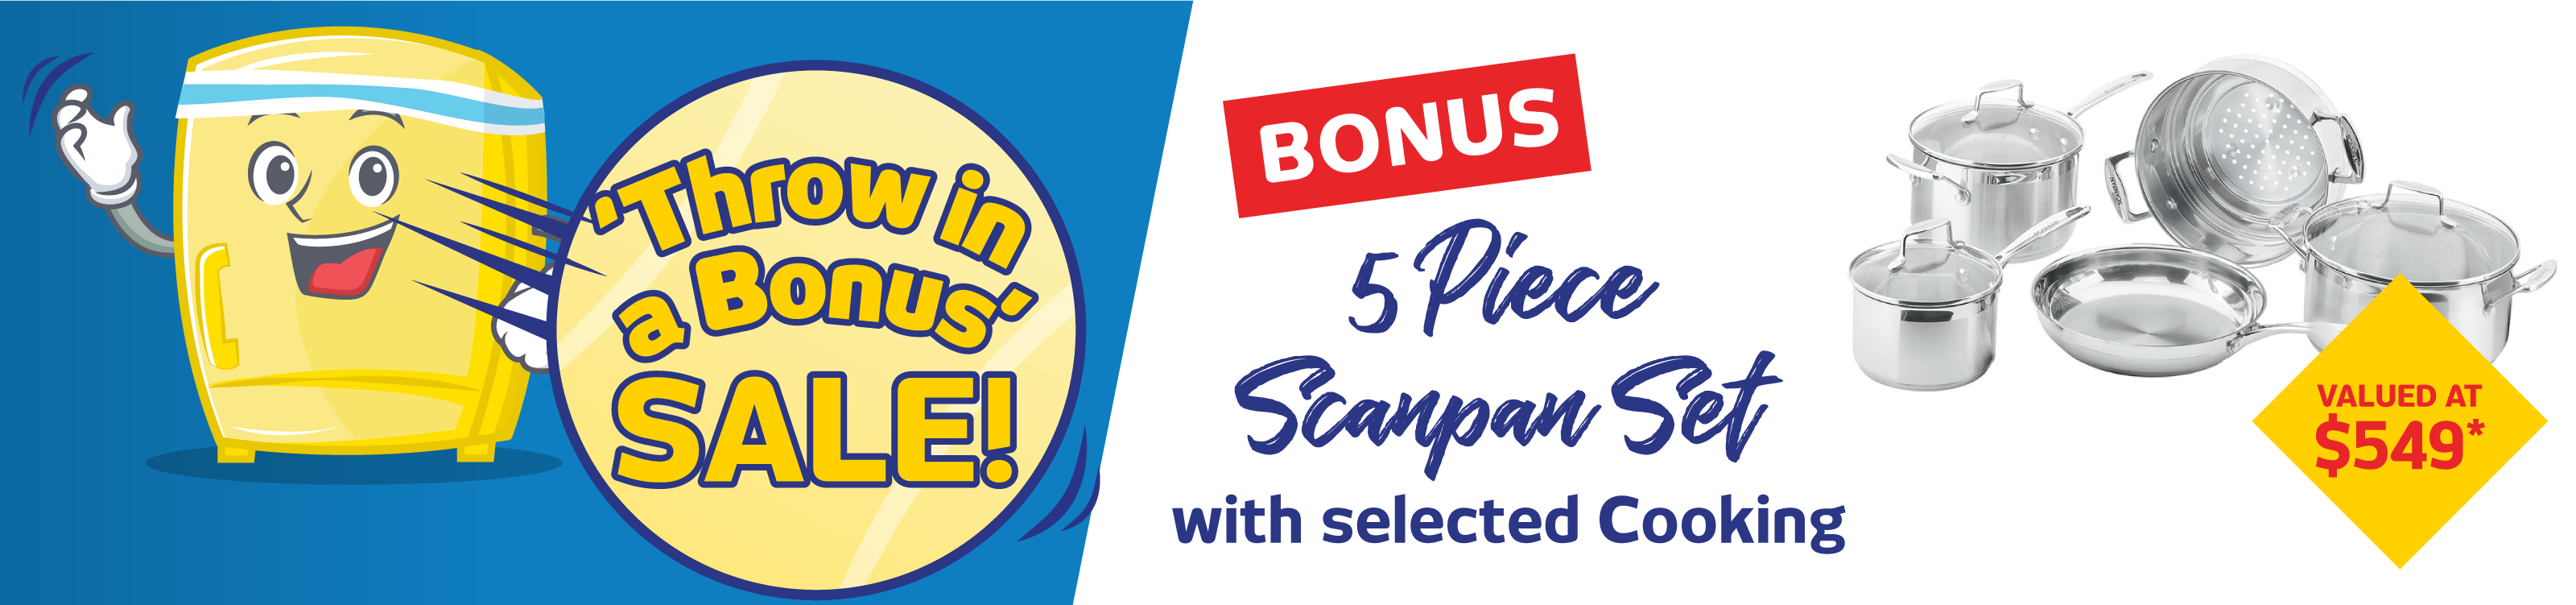 bonus-5-piece-scanpan-set